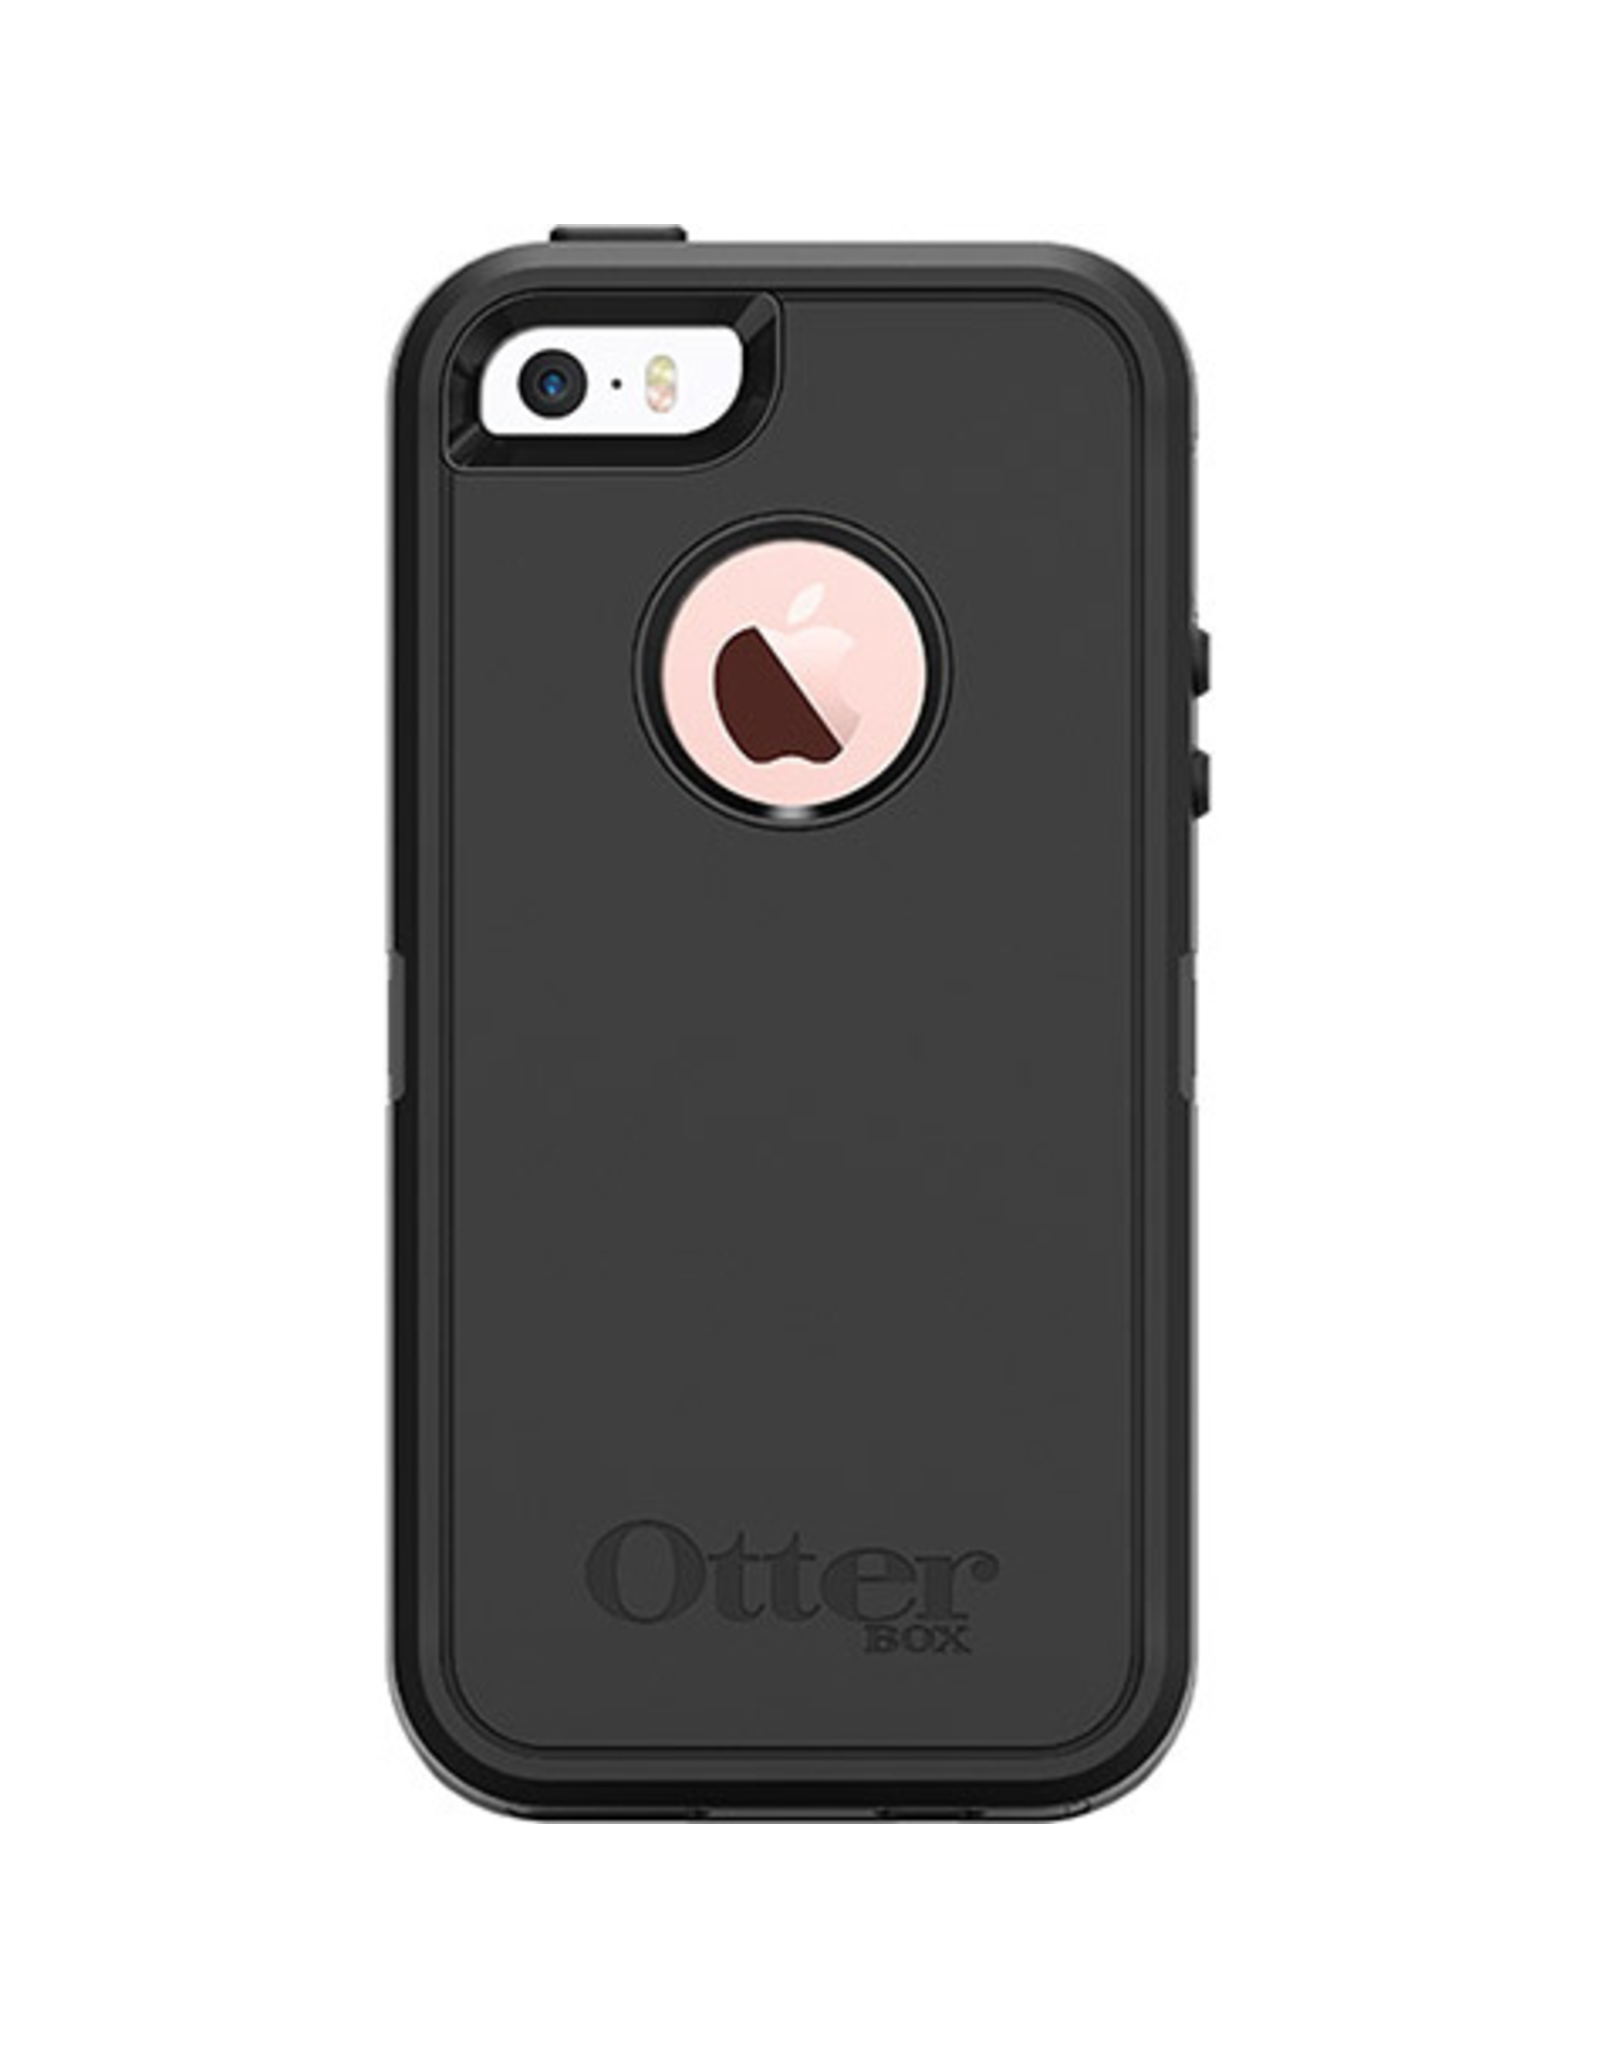 Otterbox OtterBox Defender case suits iPhone 5/5s/SE - Black